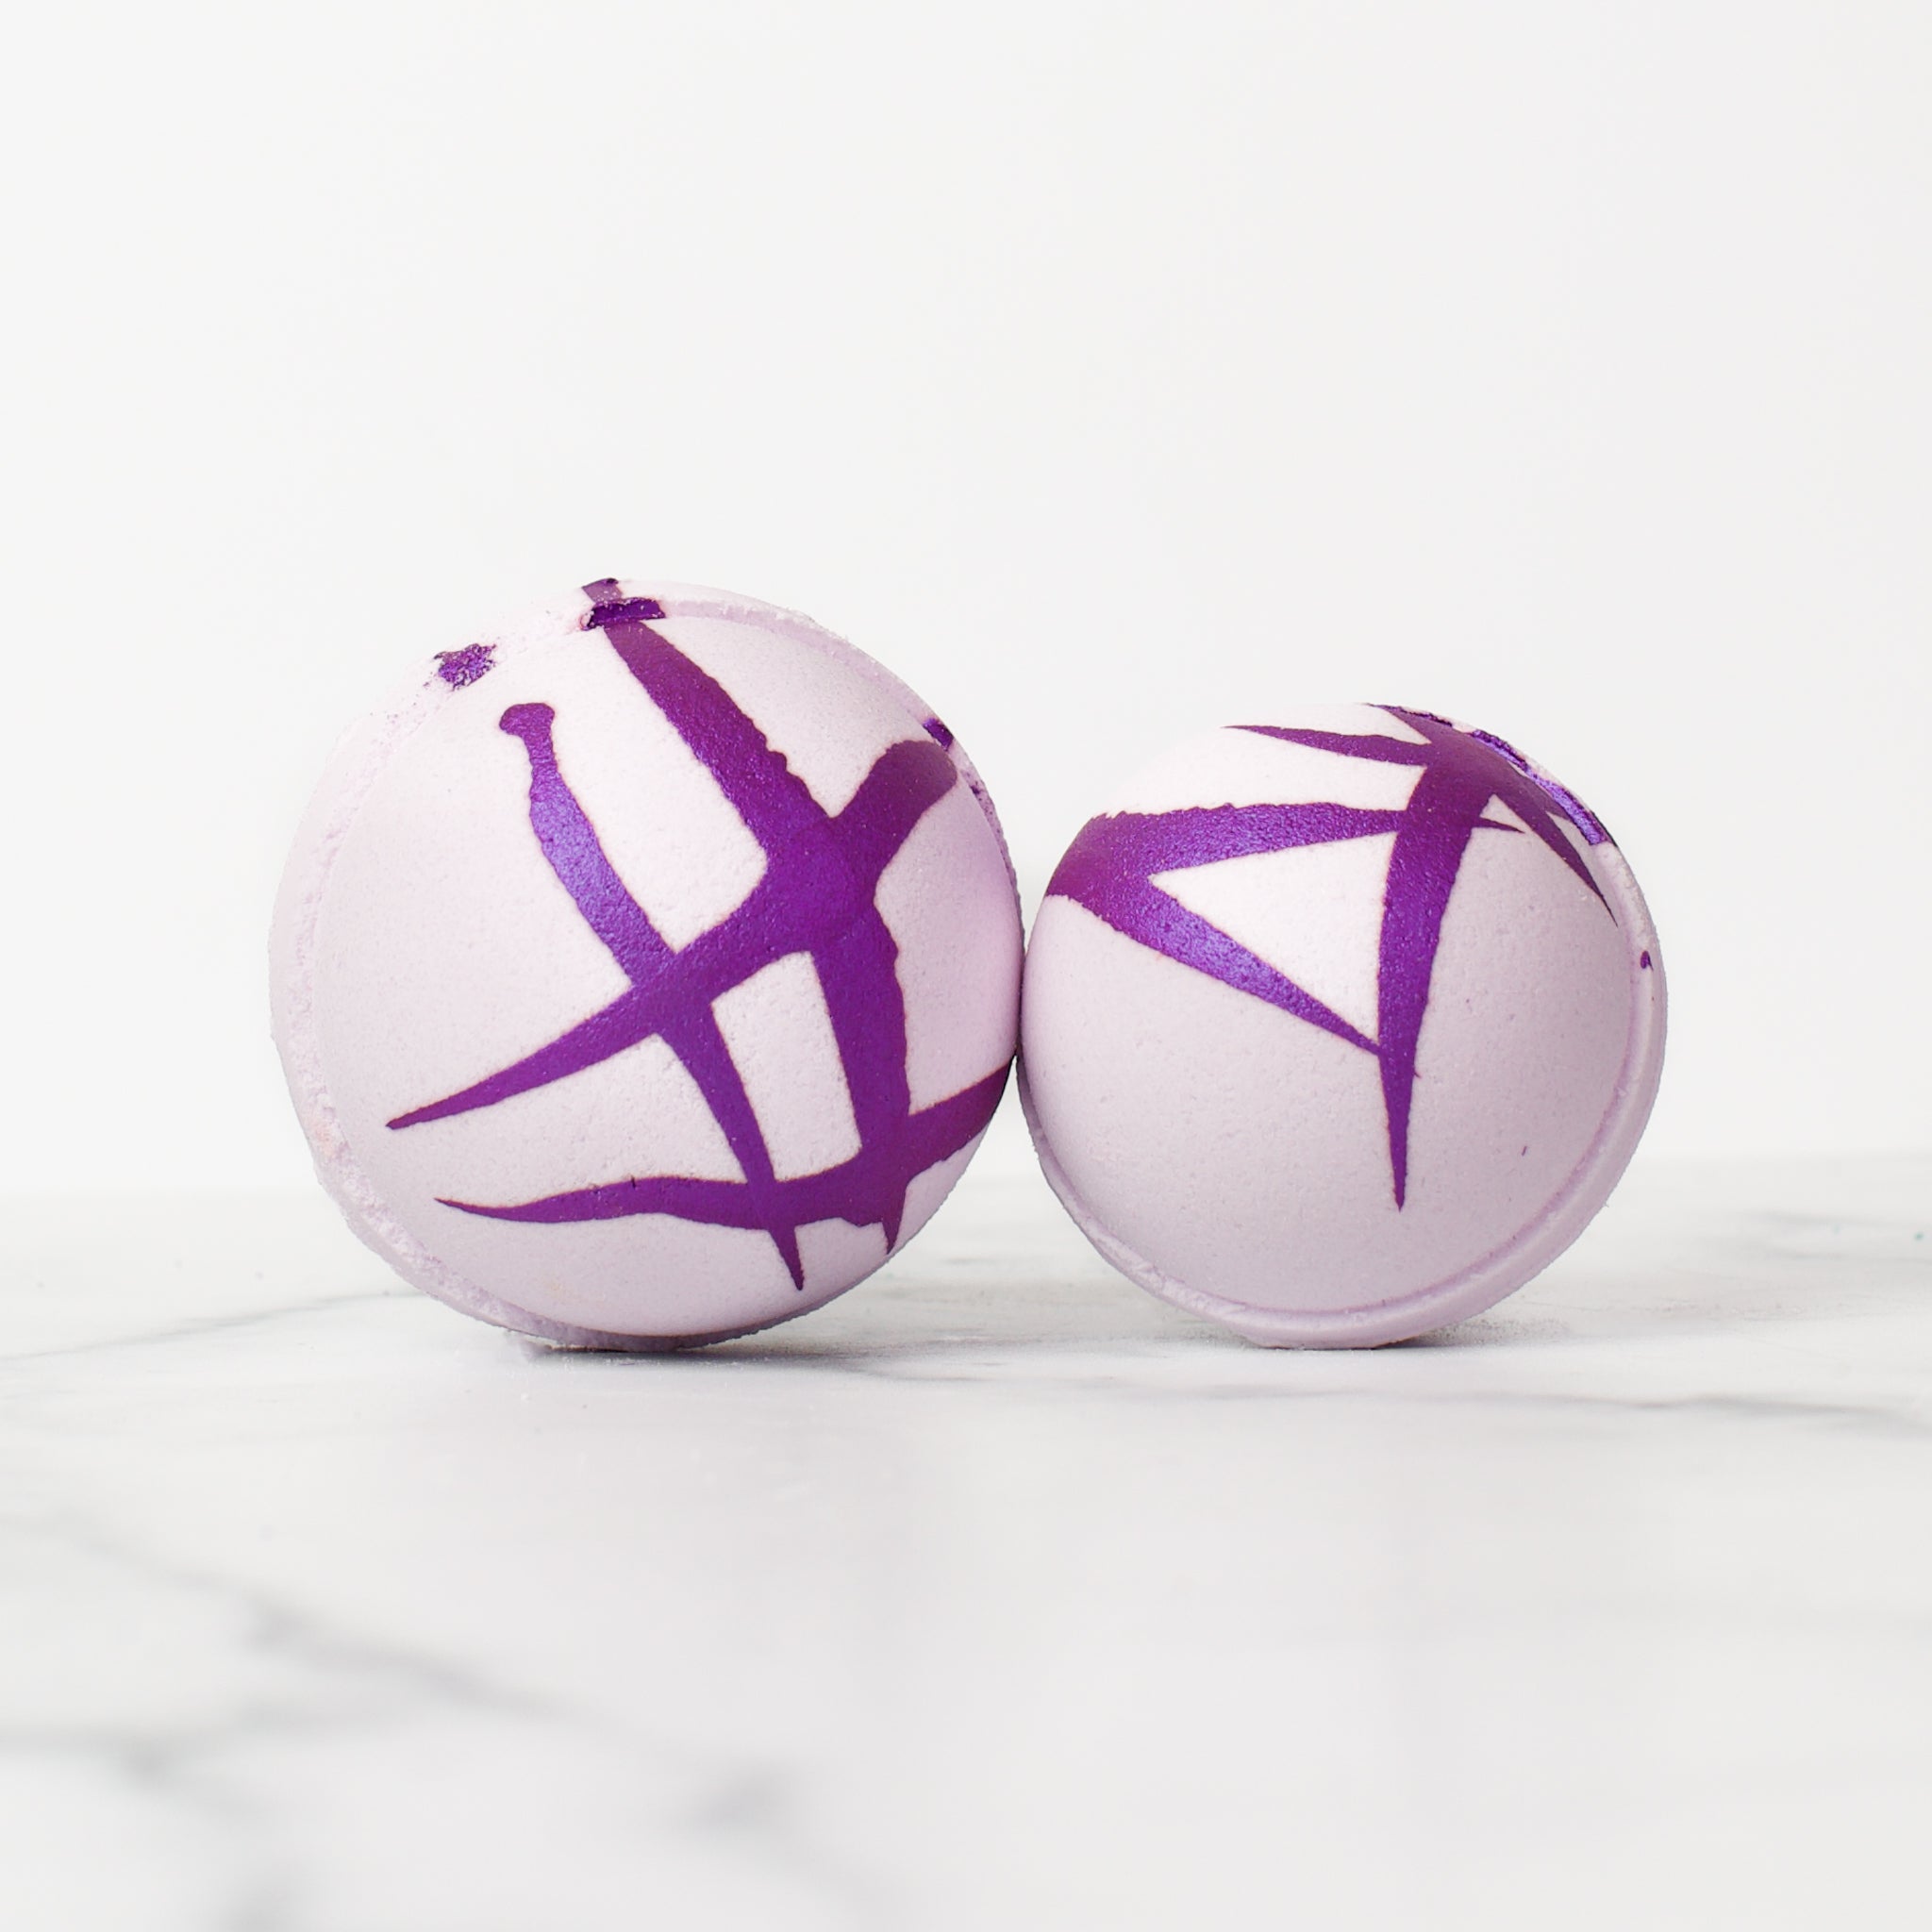 One large and one medium round Lavender & Palmarosa bath bombs on a white background. Lavender & Palmarosa is a light purple bath bomb with a dark purple splatter design.